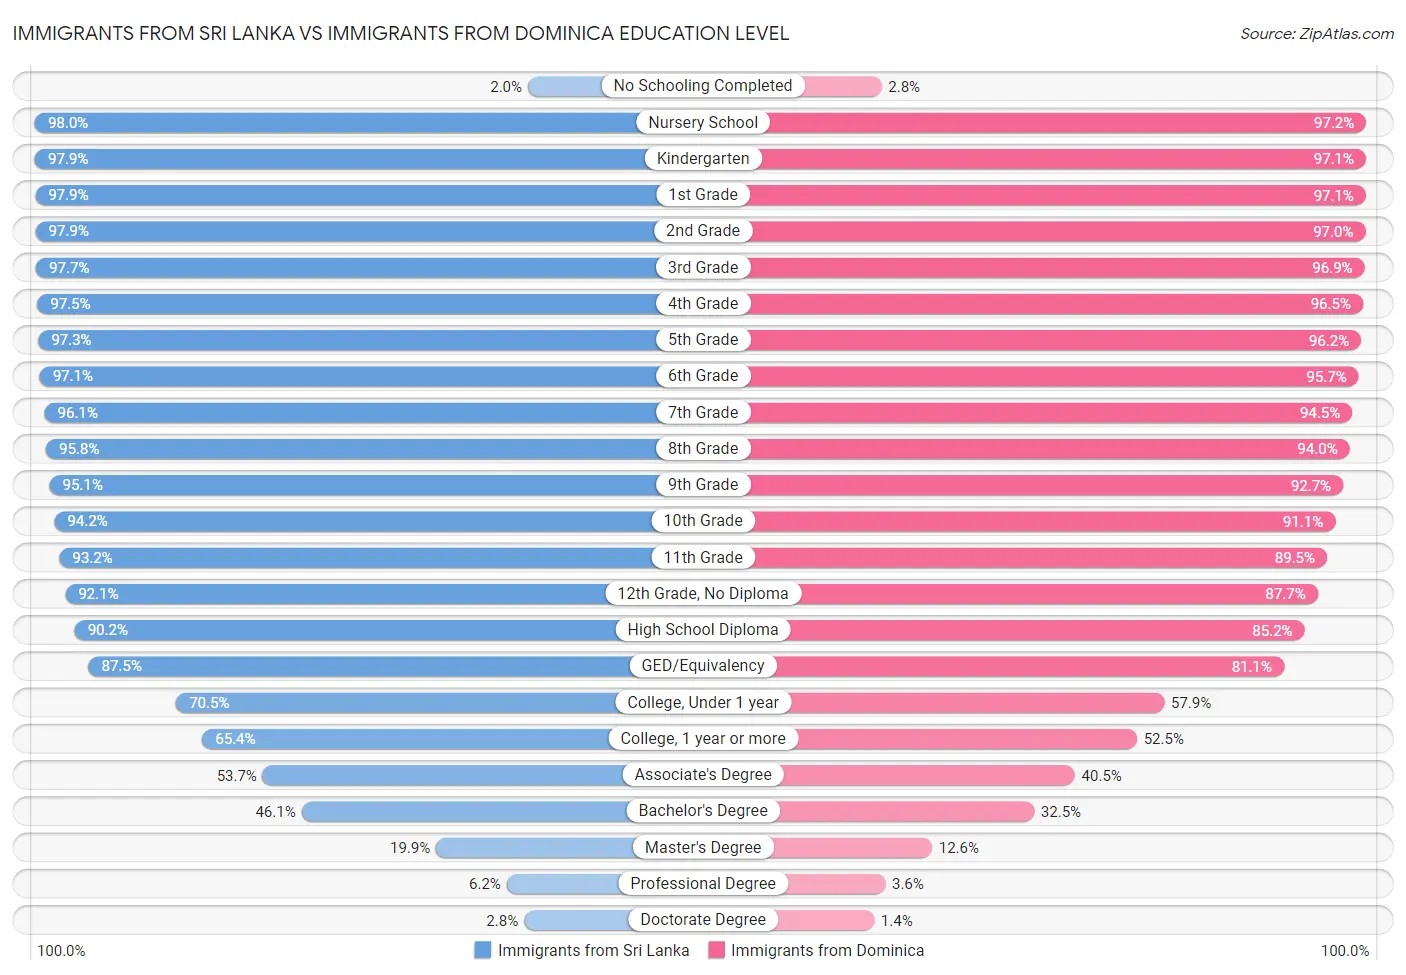 Immigrants from Sri Lanka vs Immigrants from Dominica Education Level